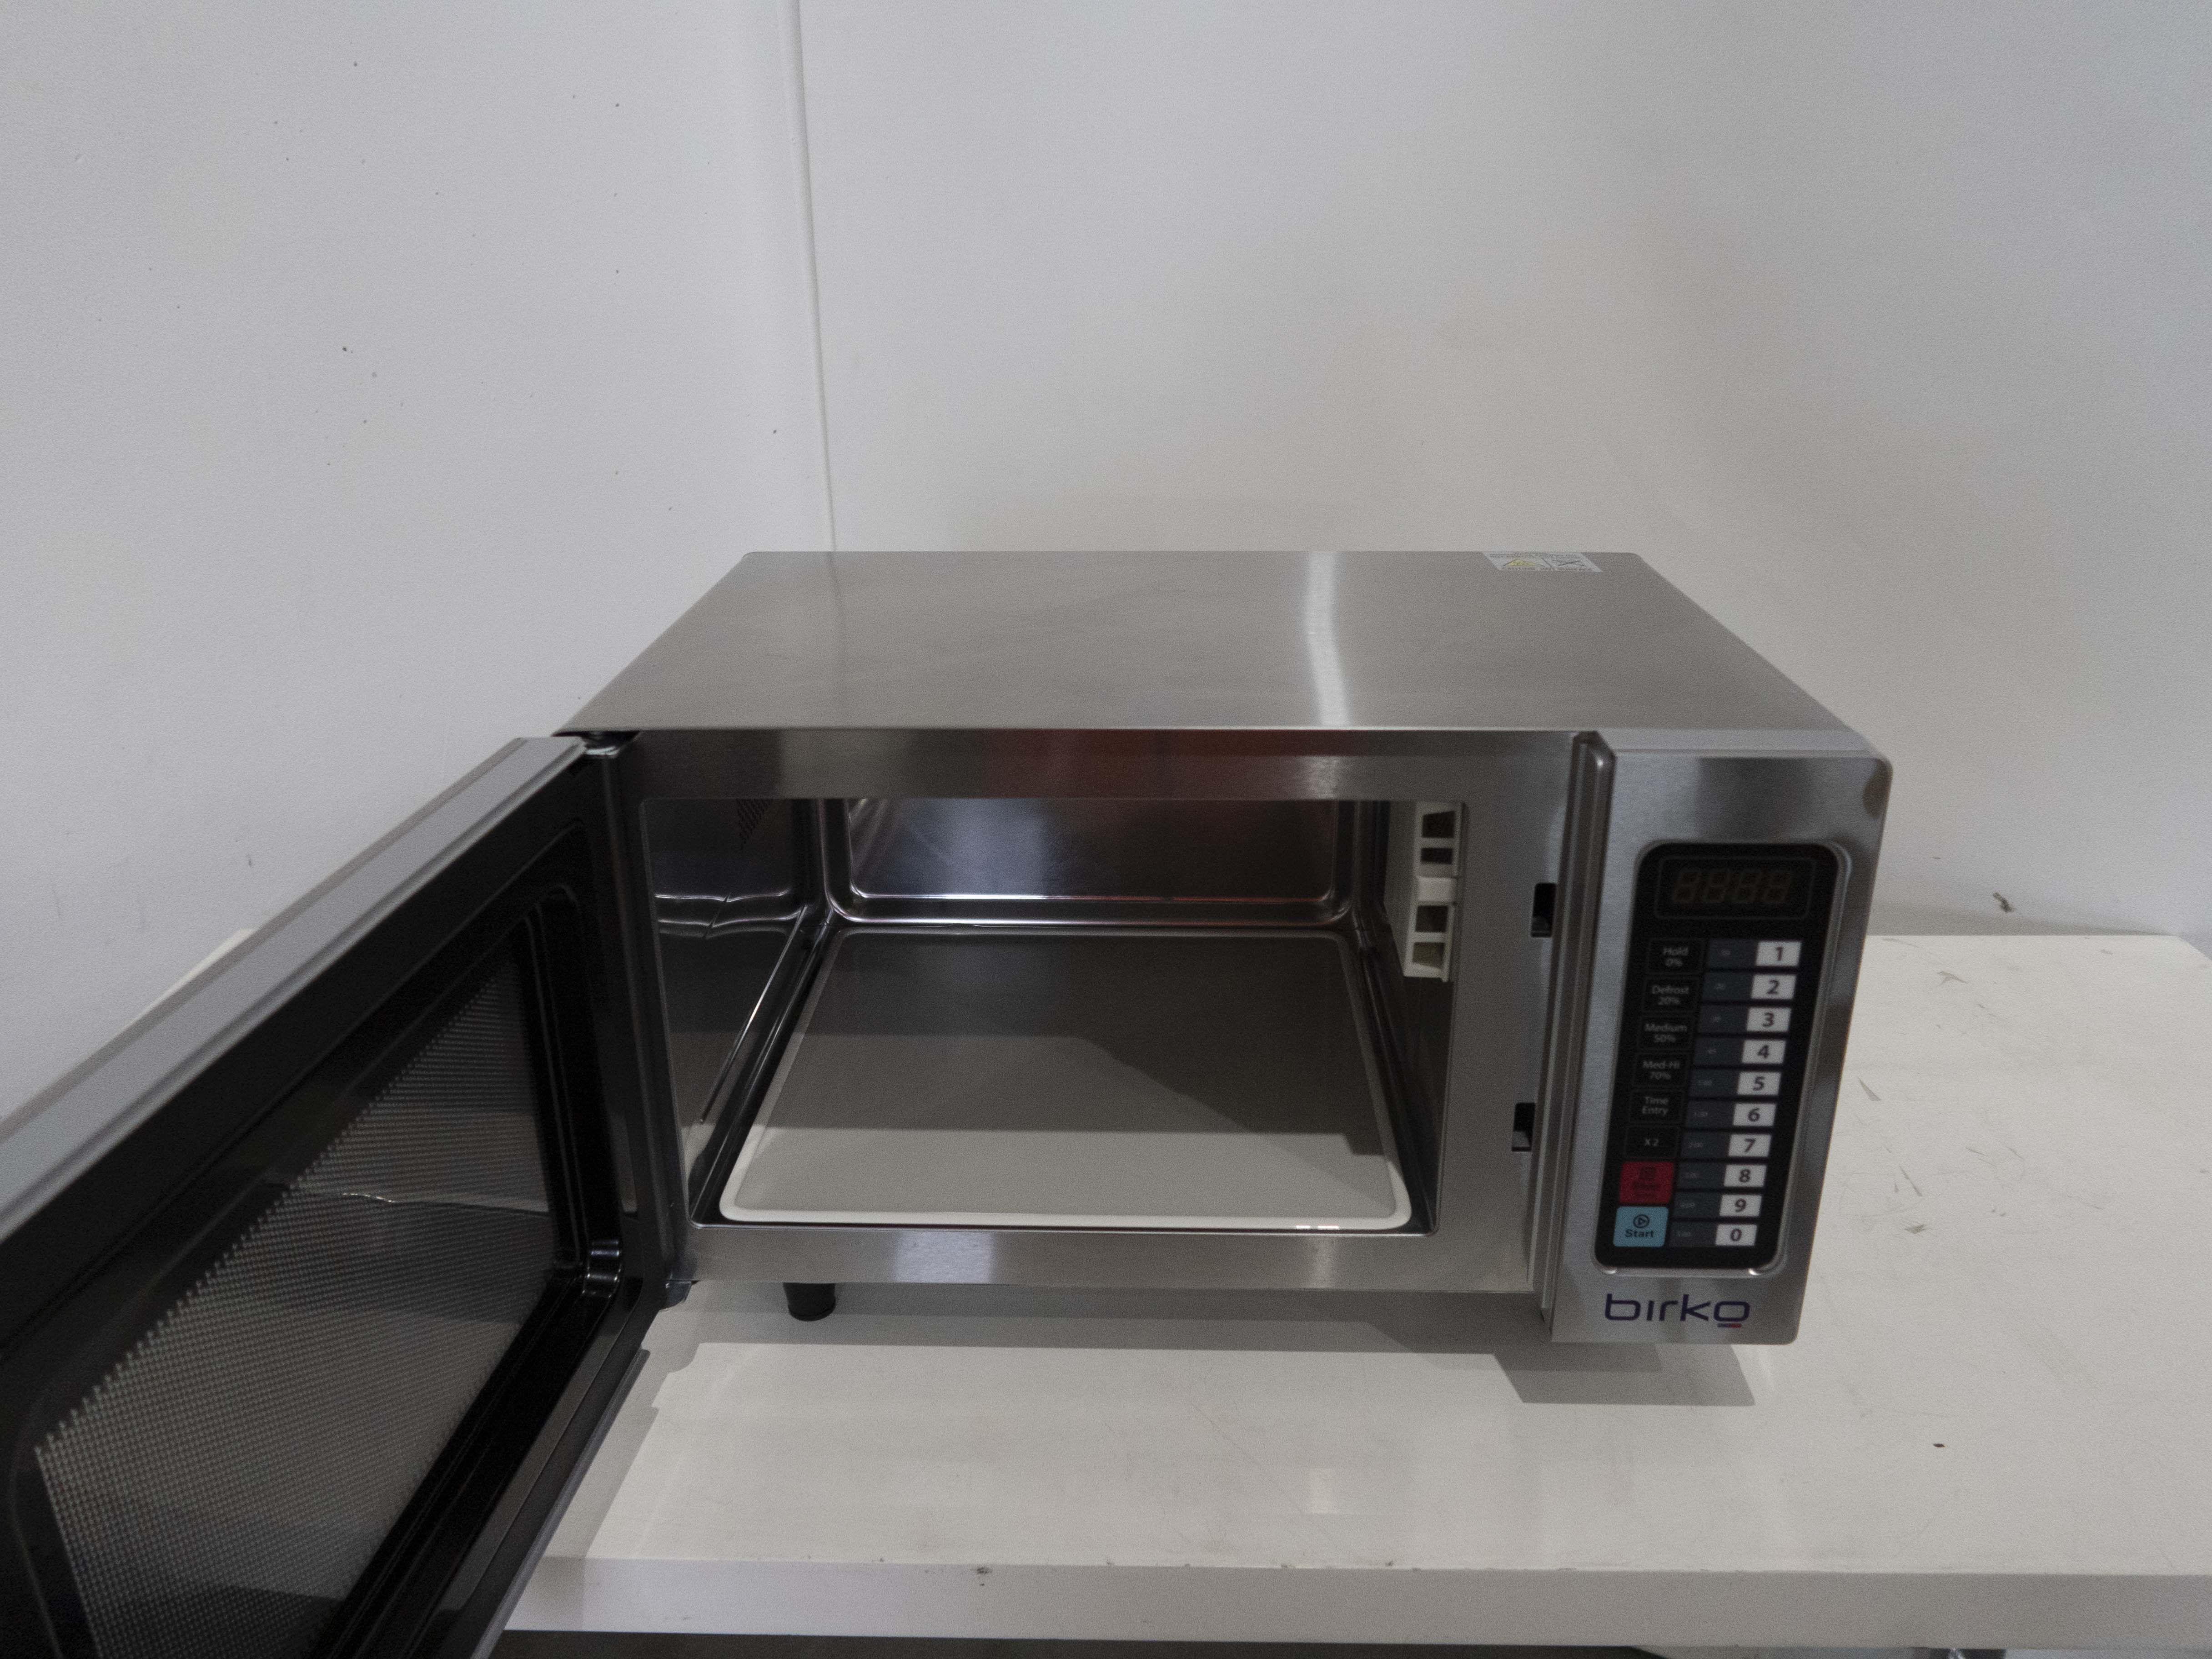 Thumbnail - Birko 1200325 25L Microwave Oven